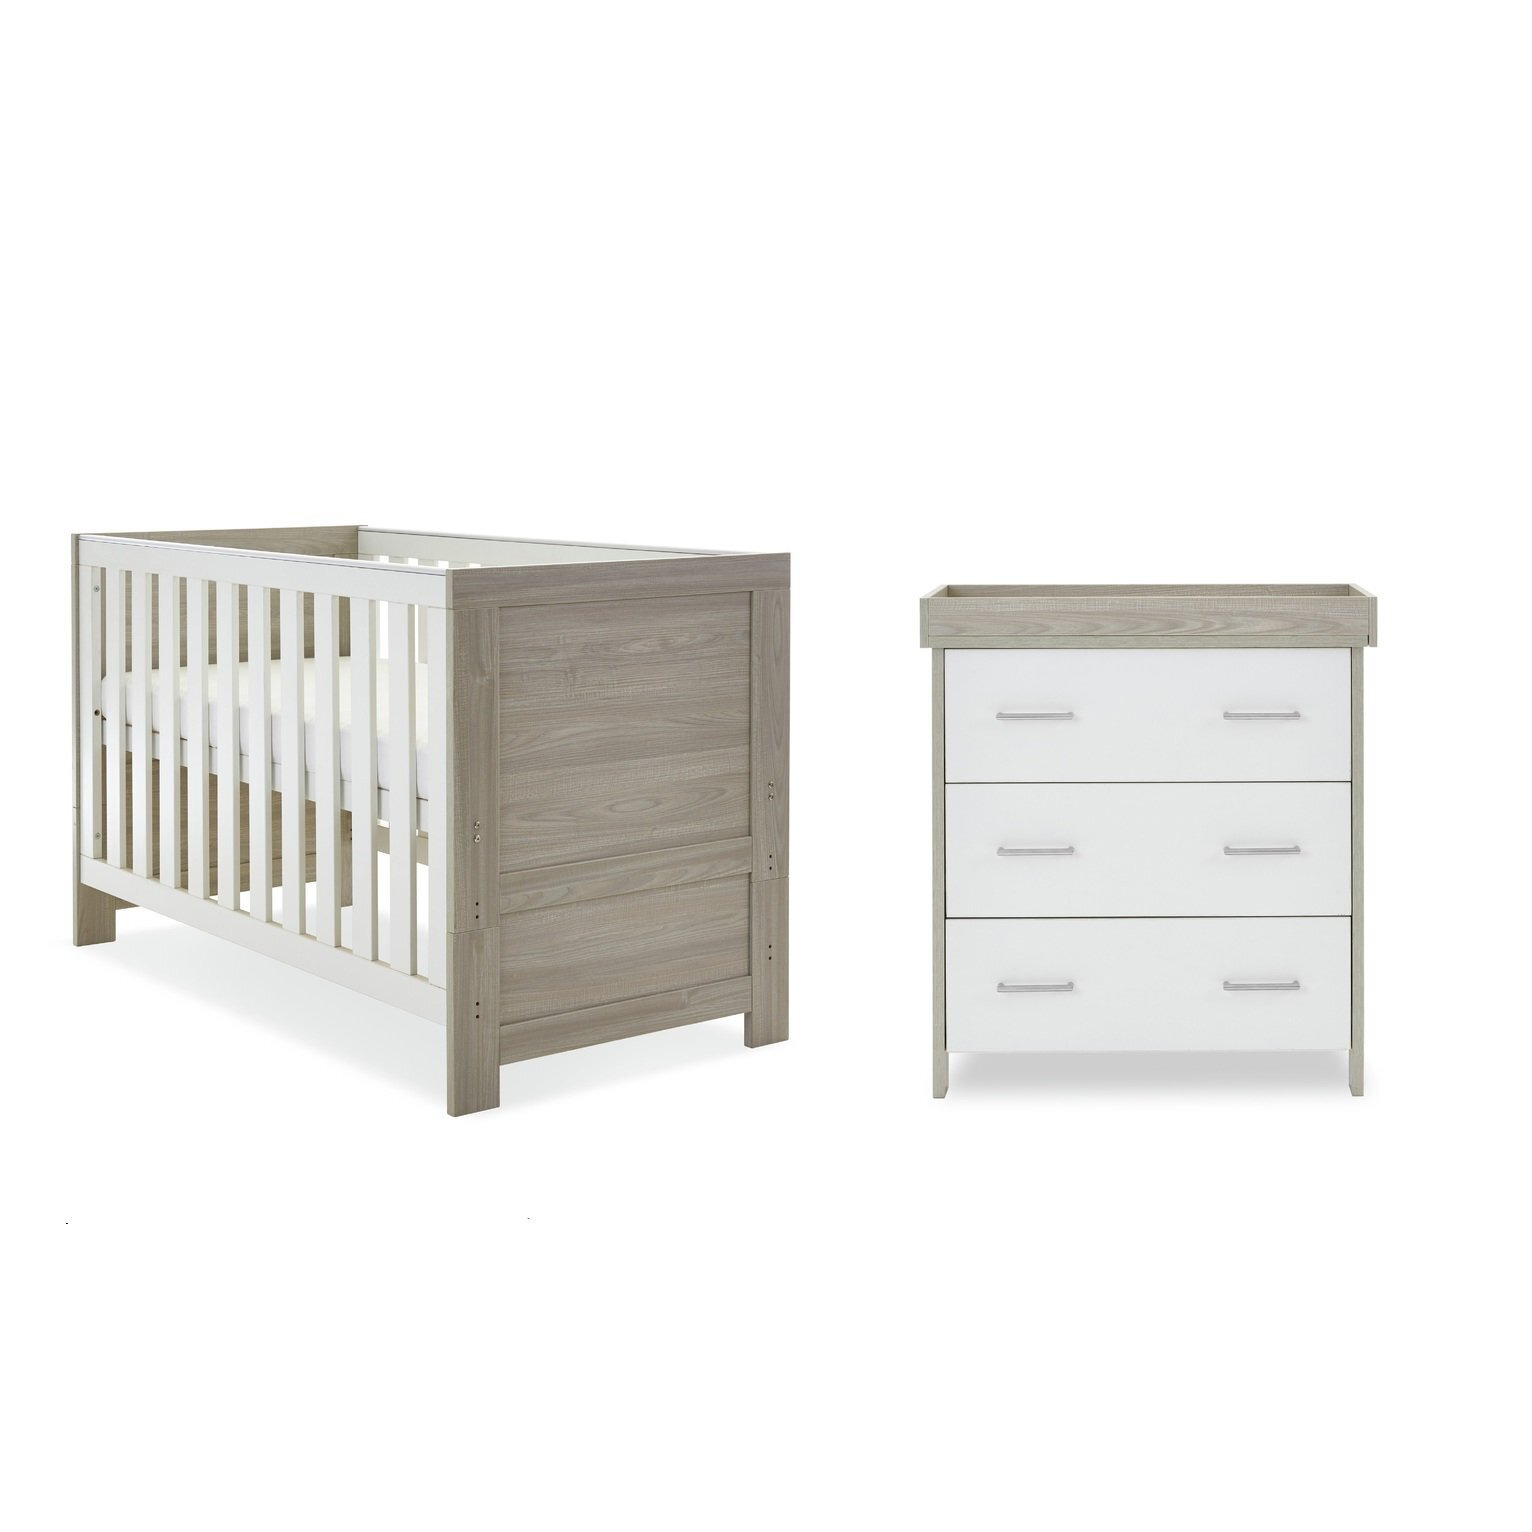 Obaby Nika 2 Piece Nursery Furniture Set - Grey and White - image 1